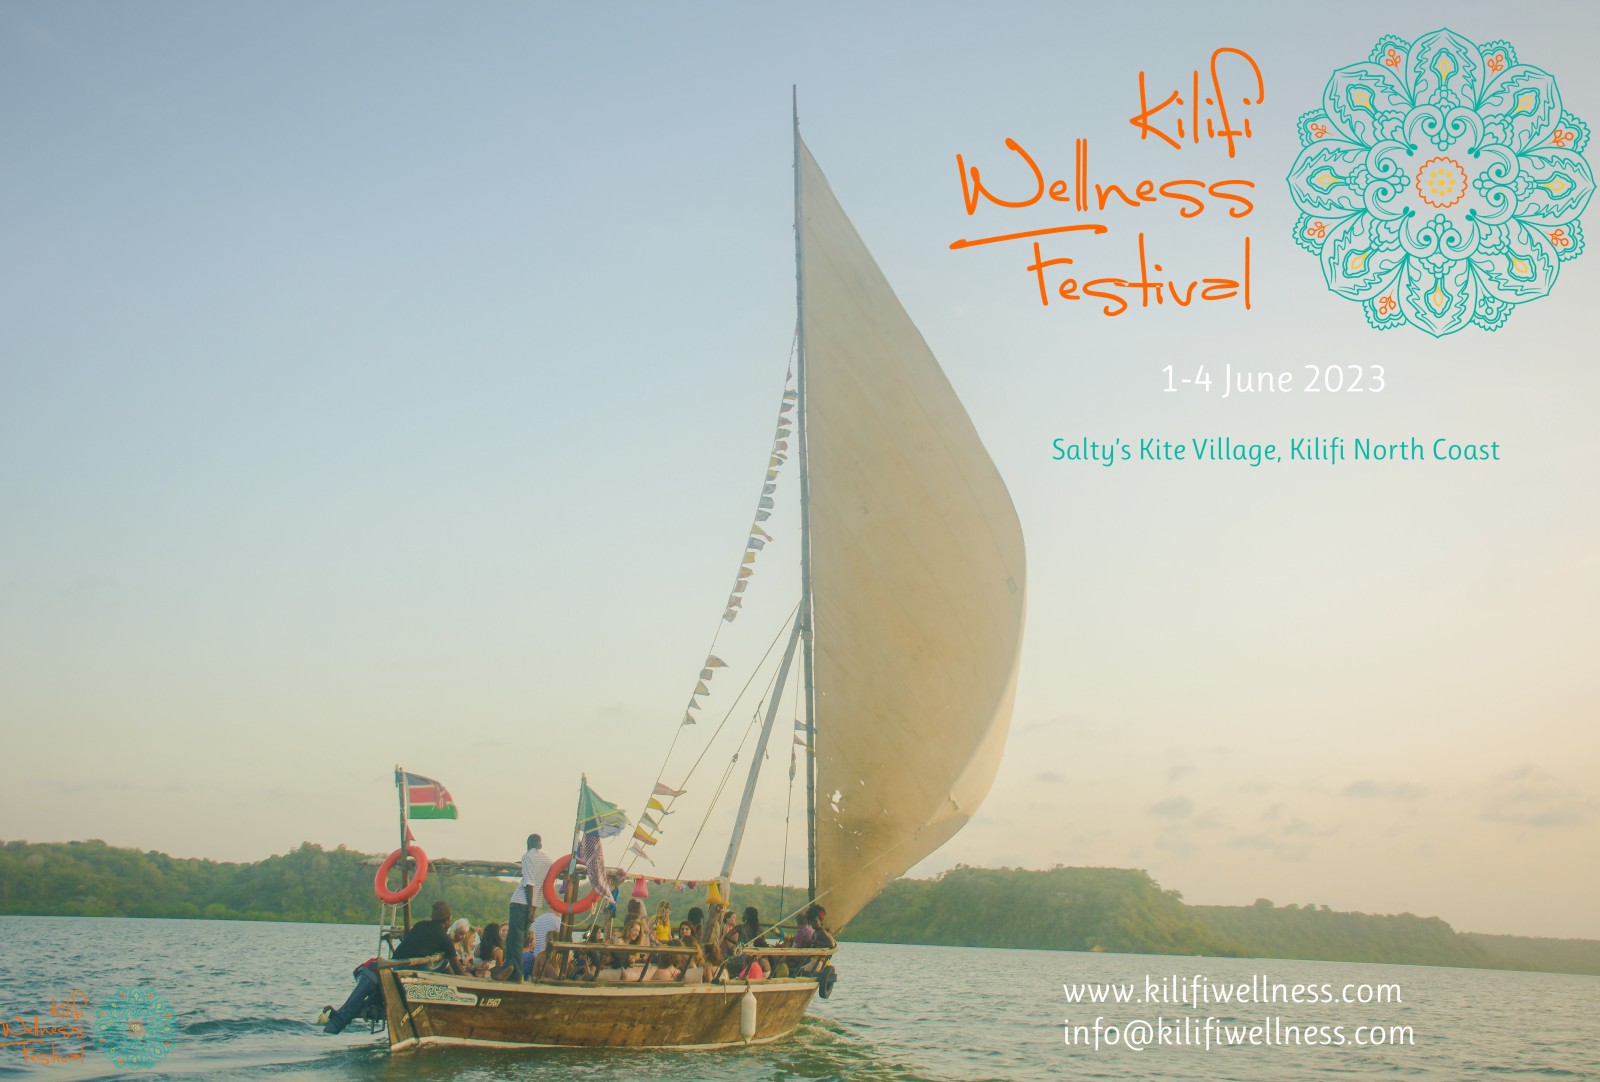 Kilifi Wellness Festival and Salty's Kitesurf Village